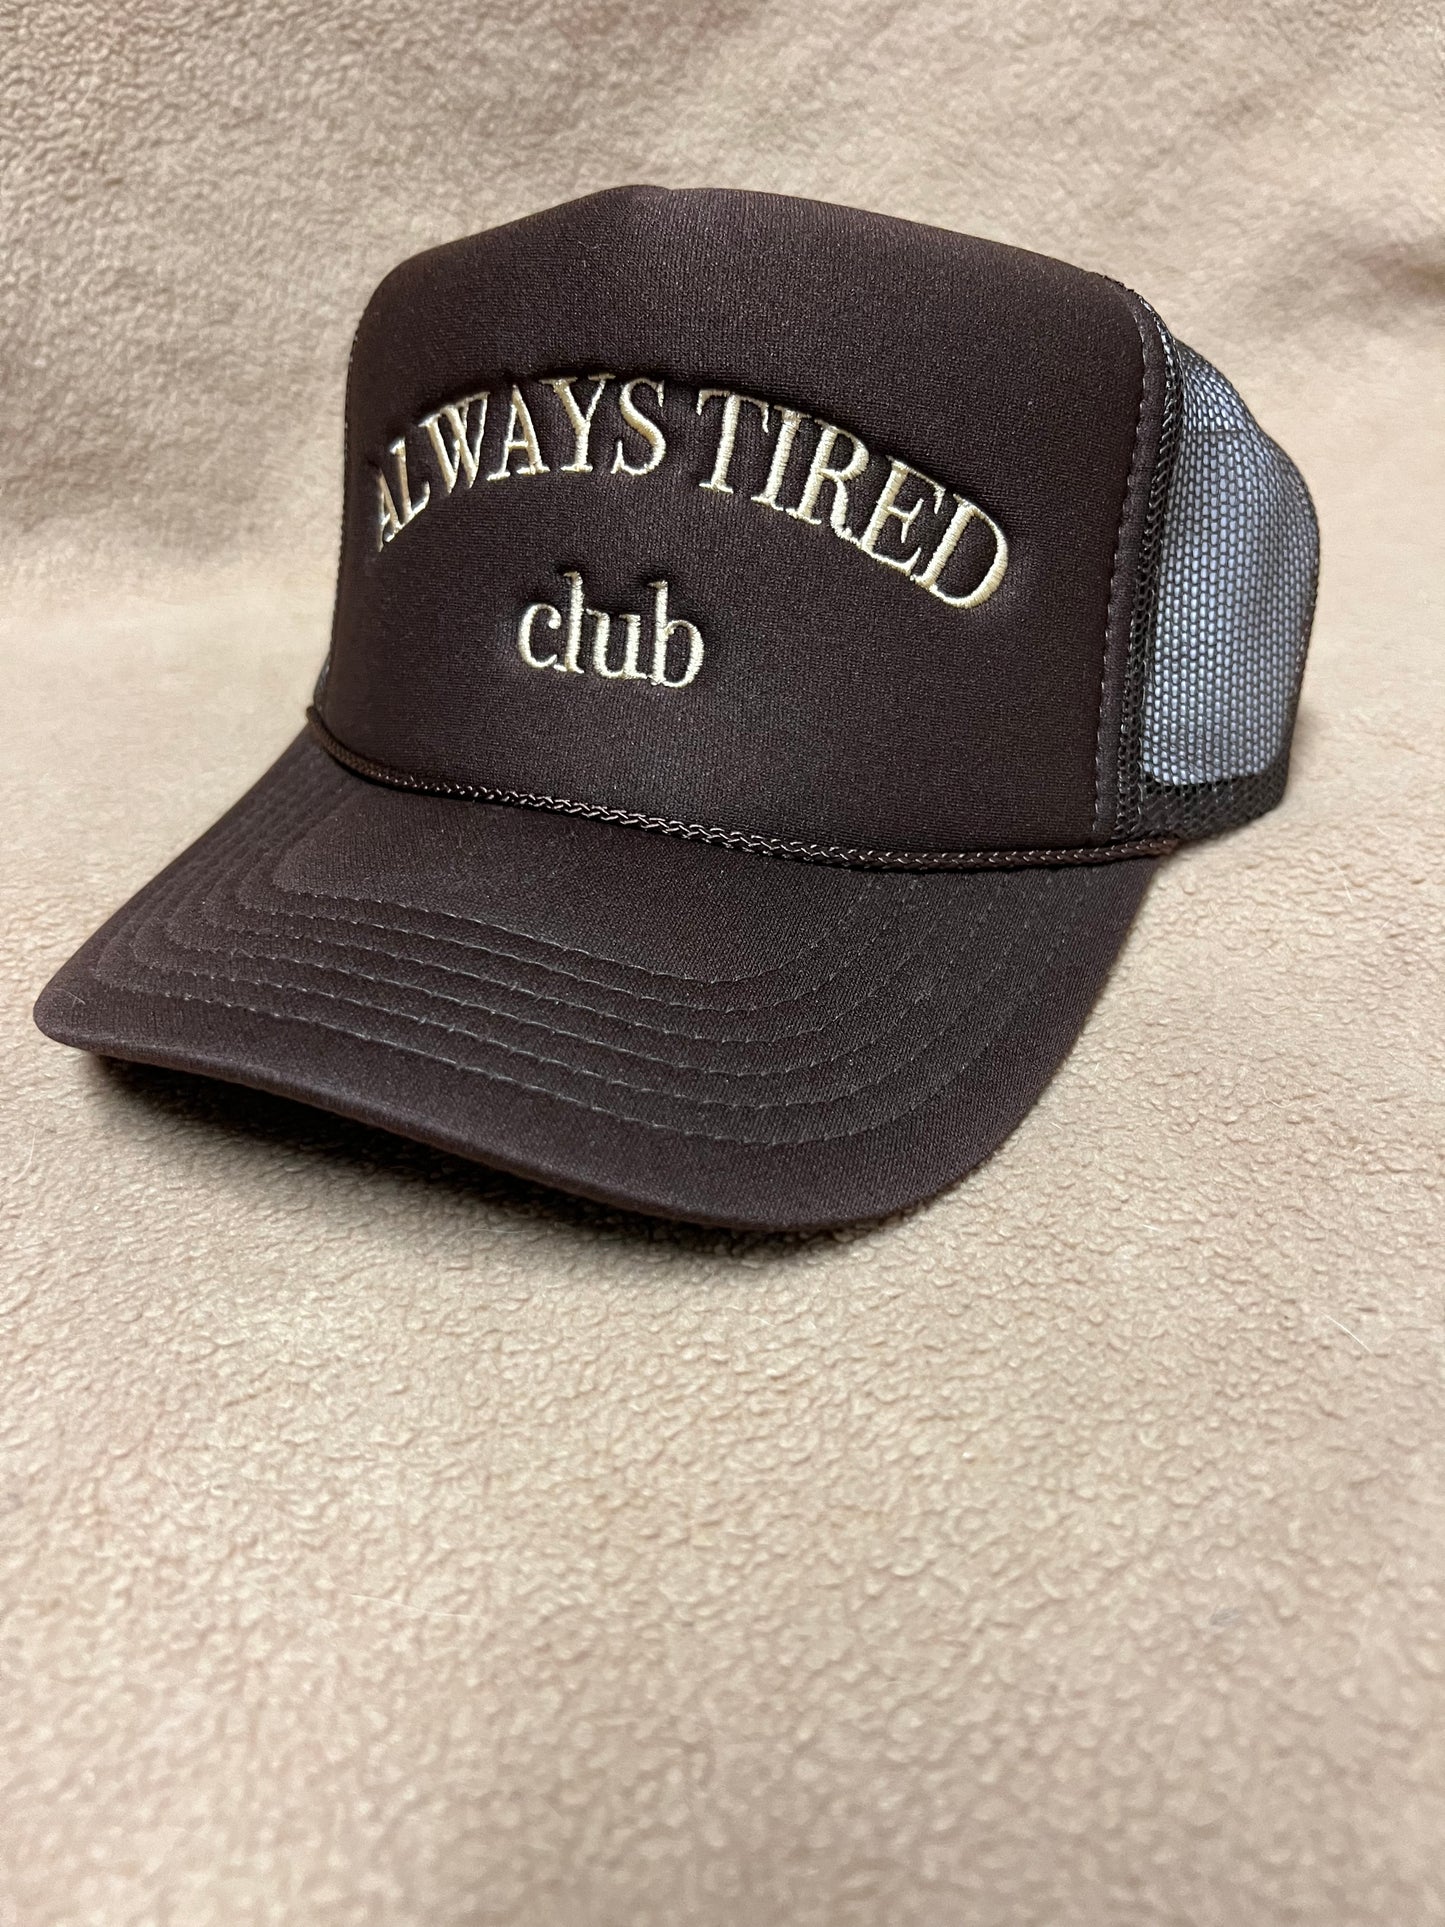 Trucker Always tired club Hat